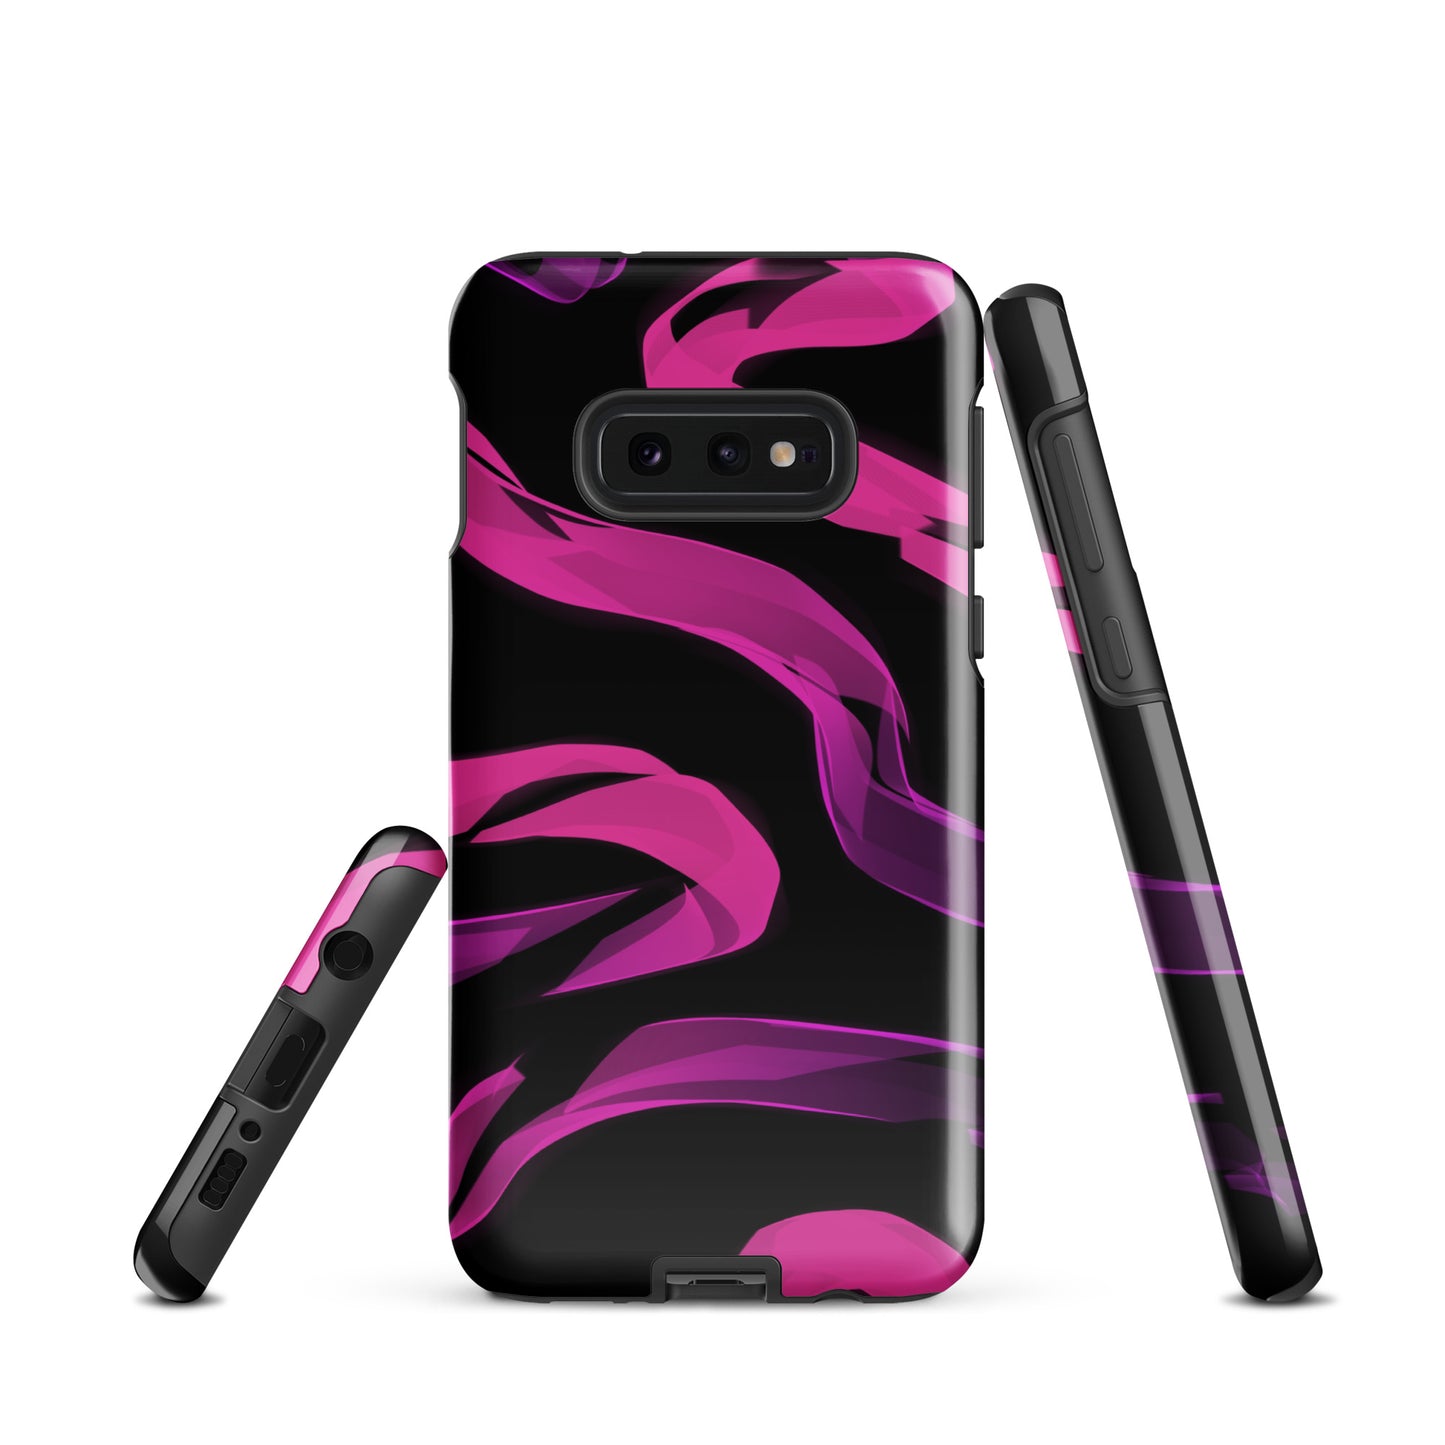 A Bright Pink Neon Sketch Case for the Samsung Galaxy S10e